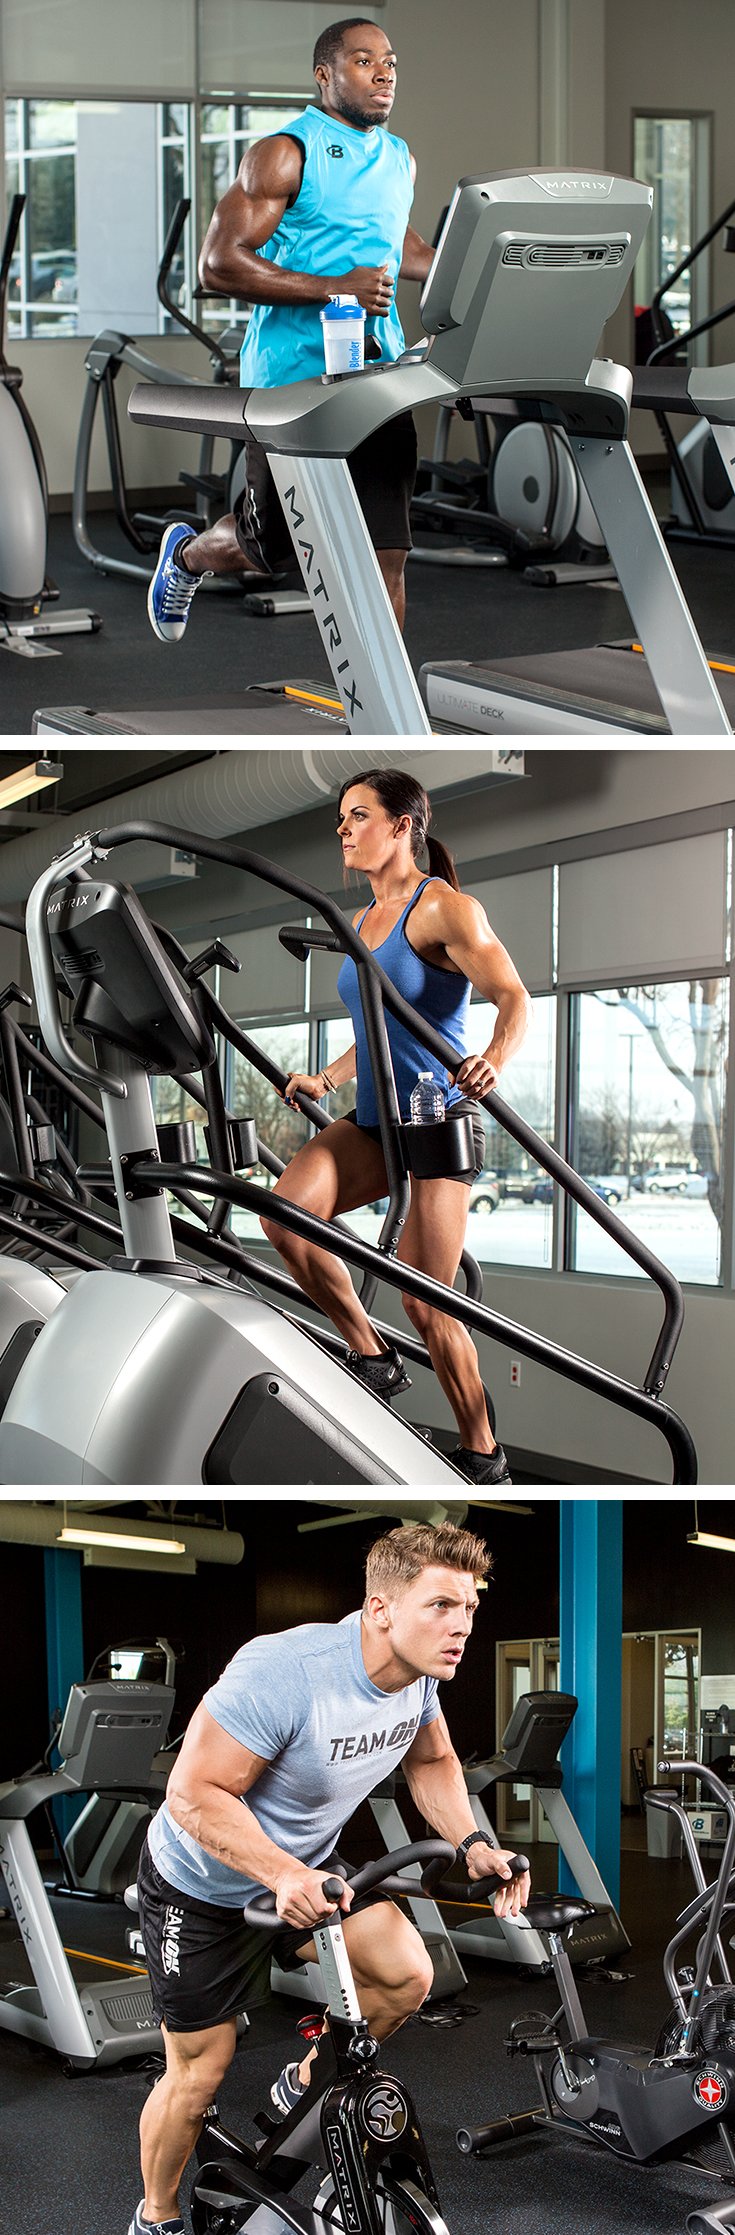 Fitness Equipment Online, Elliptical Trainer, USA